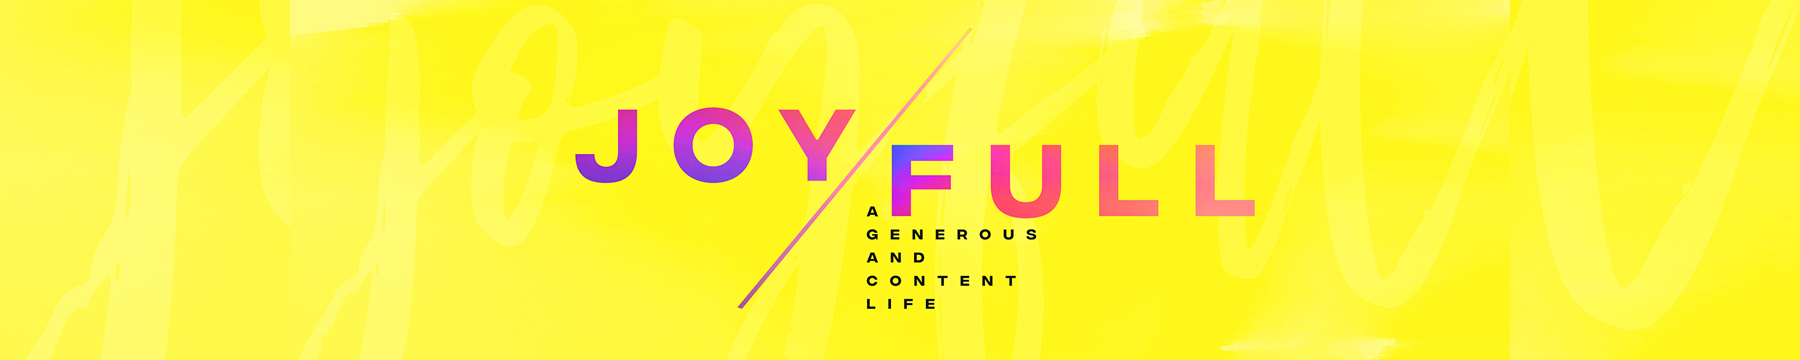 Our Current Sermon Series: JoyFull